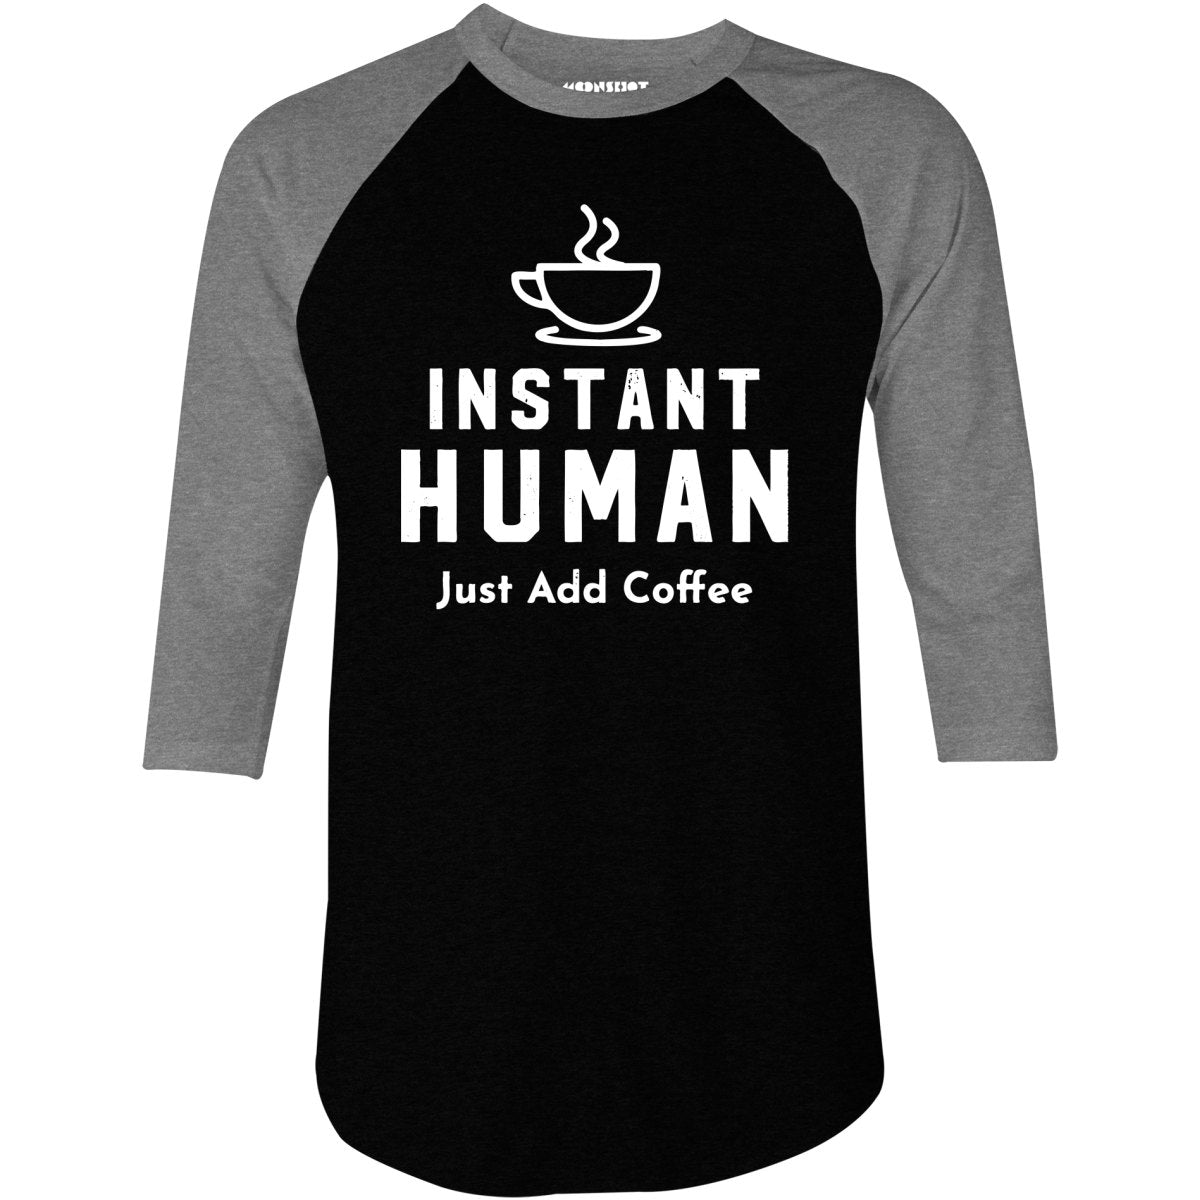 Instant Human Just Add Coffee - 3/4 Sleeve Raglan T-Shirt